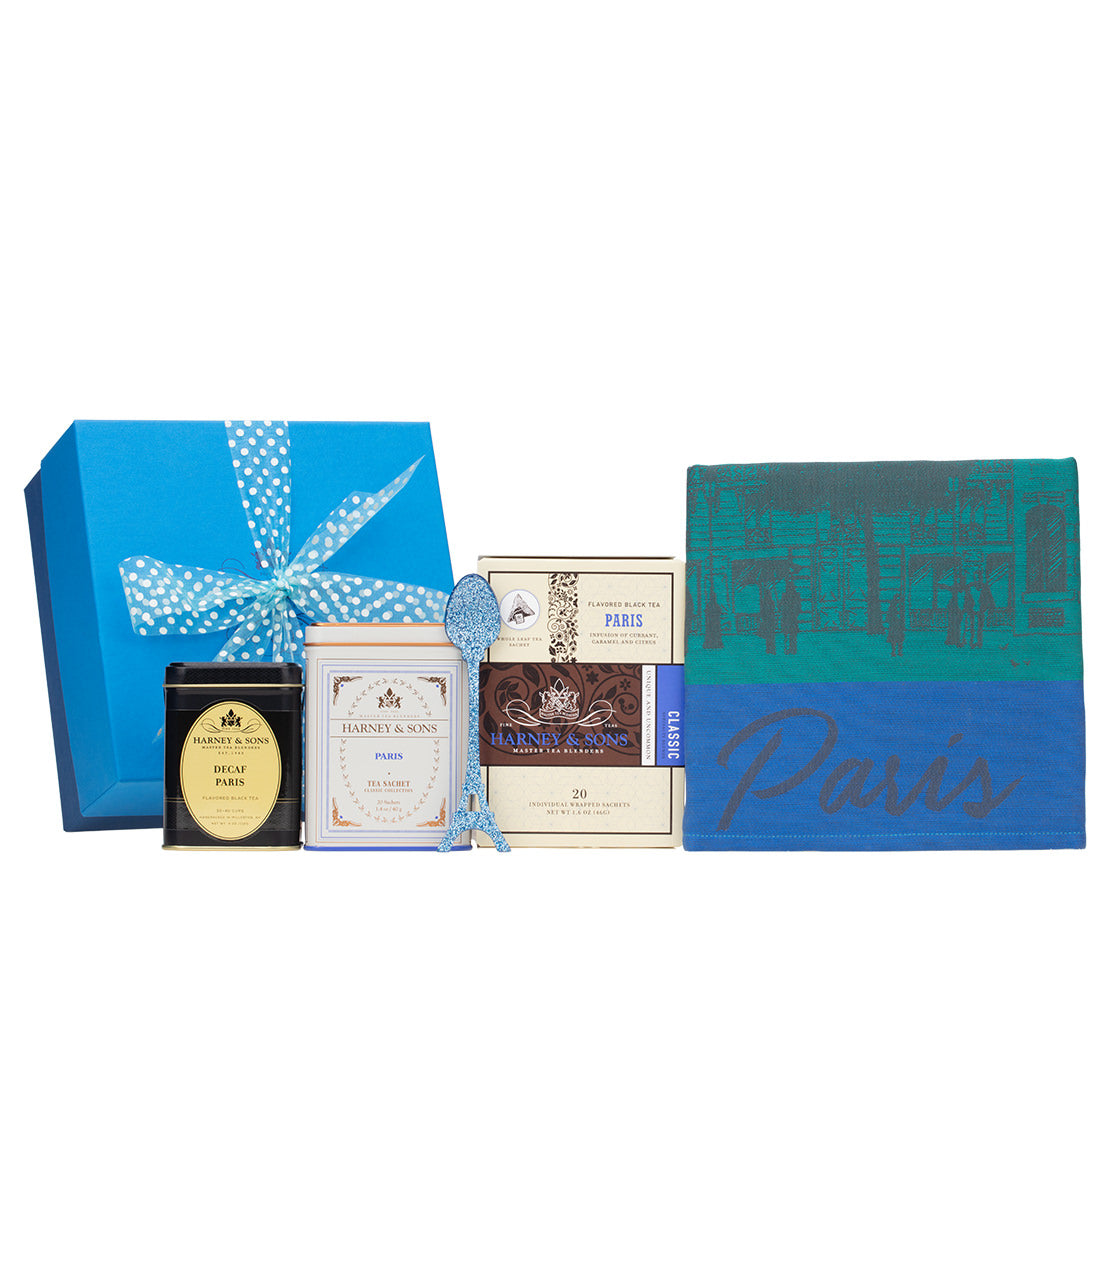 Paris Tea Gift - Loose & Sachets Paris Tea Gift - Harney & Sons Fine Teas